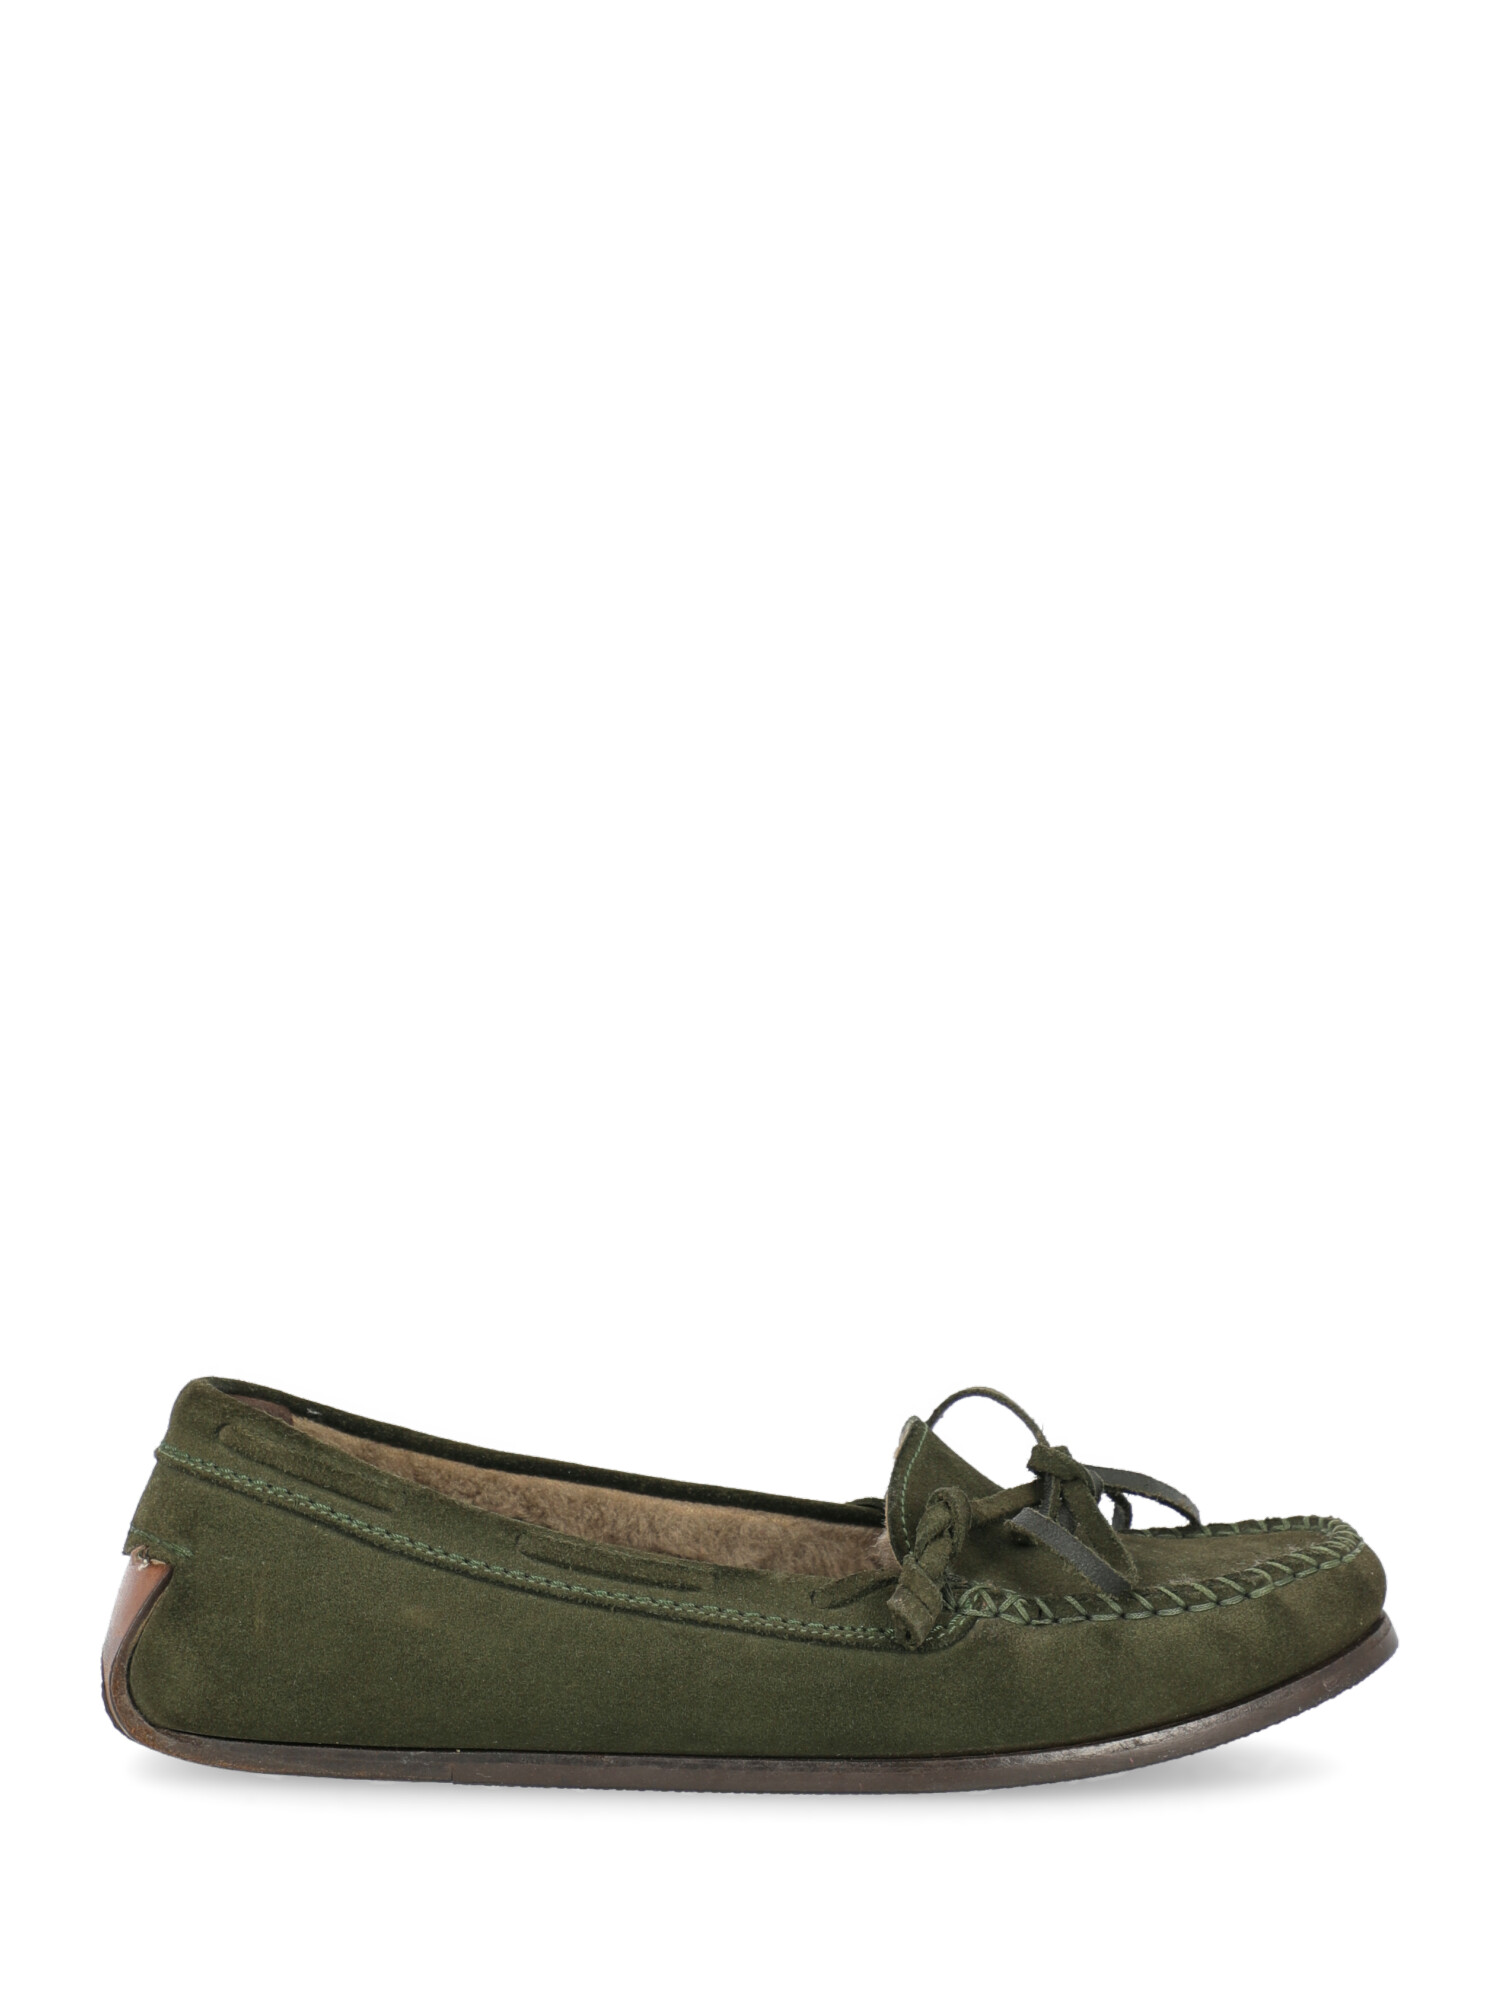 Bottega Veneta Special Price Women Shoes Loafers Green IT 37 | eBay